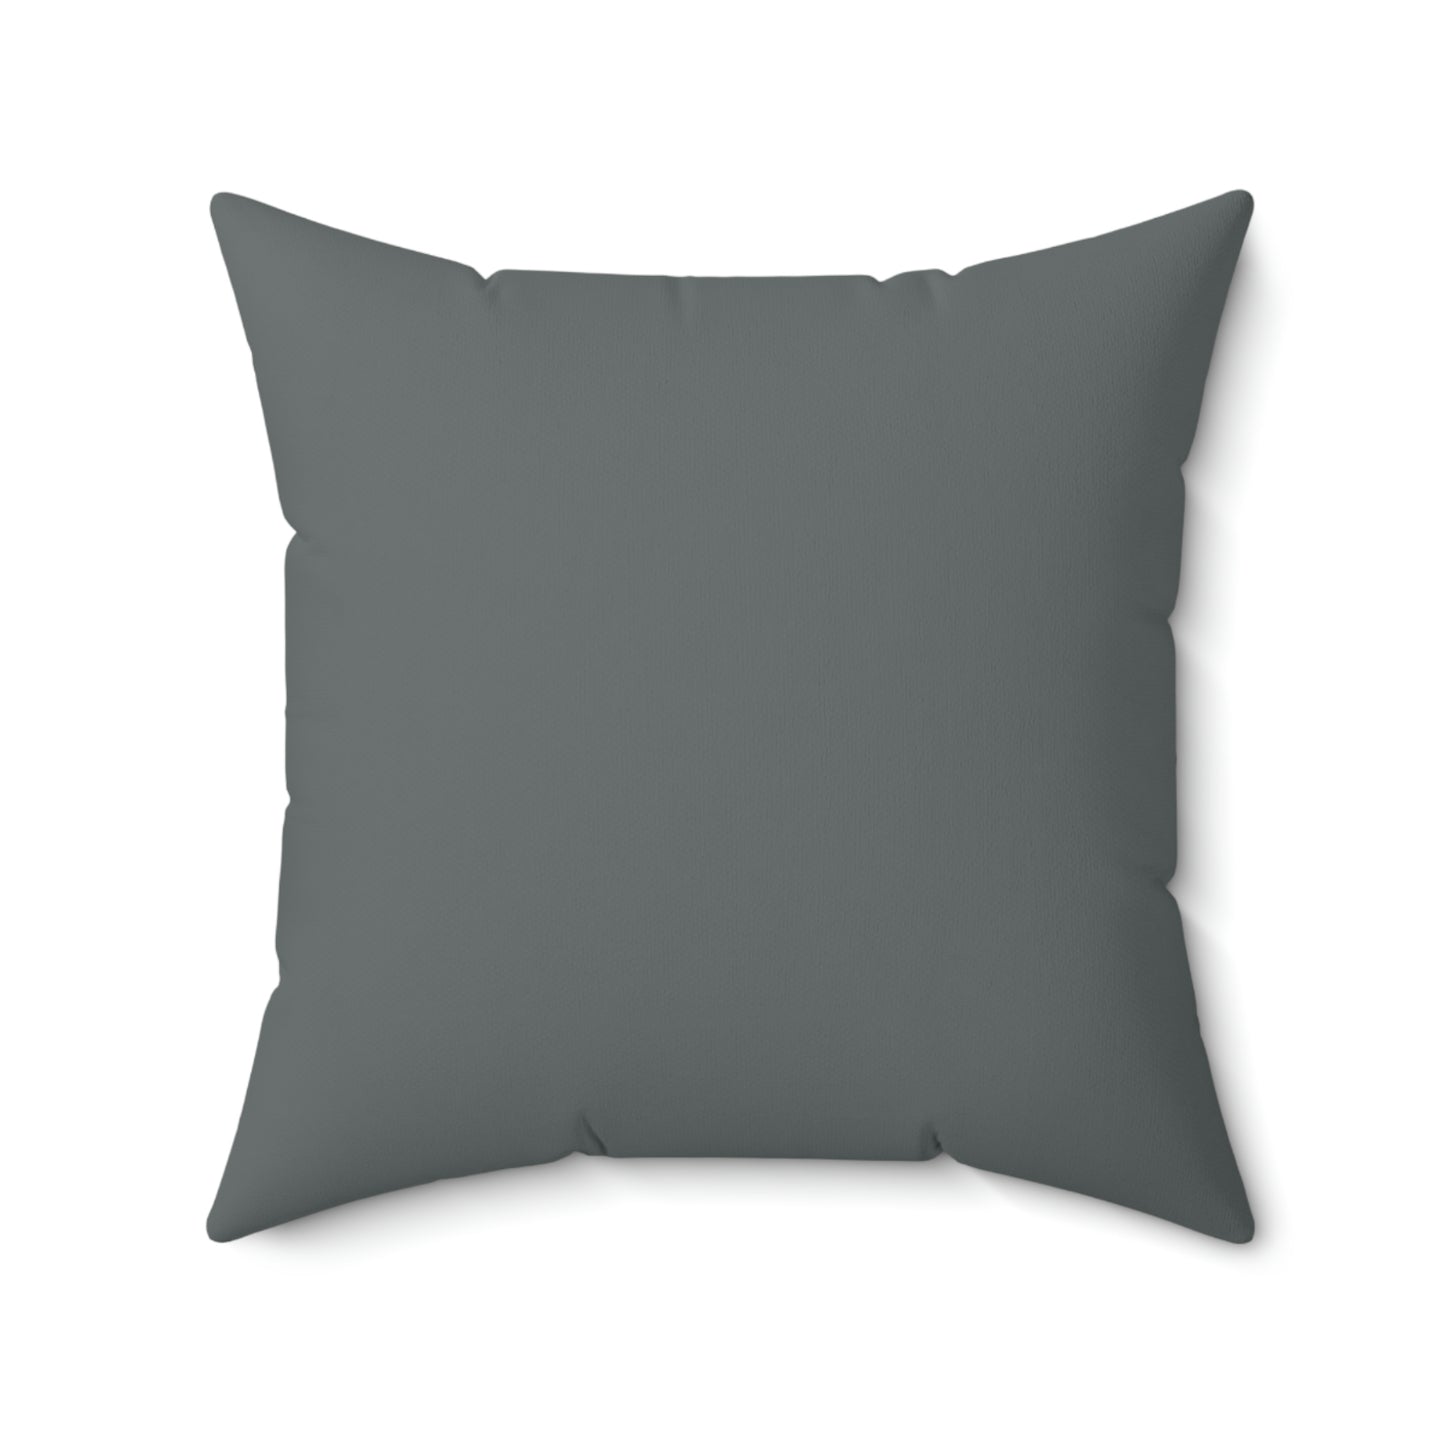 Spun Polyester Square Pillow Case "Dad Level Unlocked on Dark Gray”